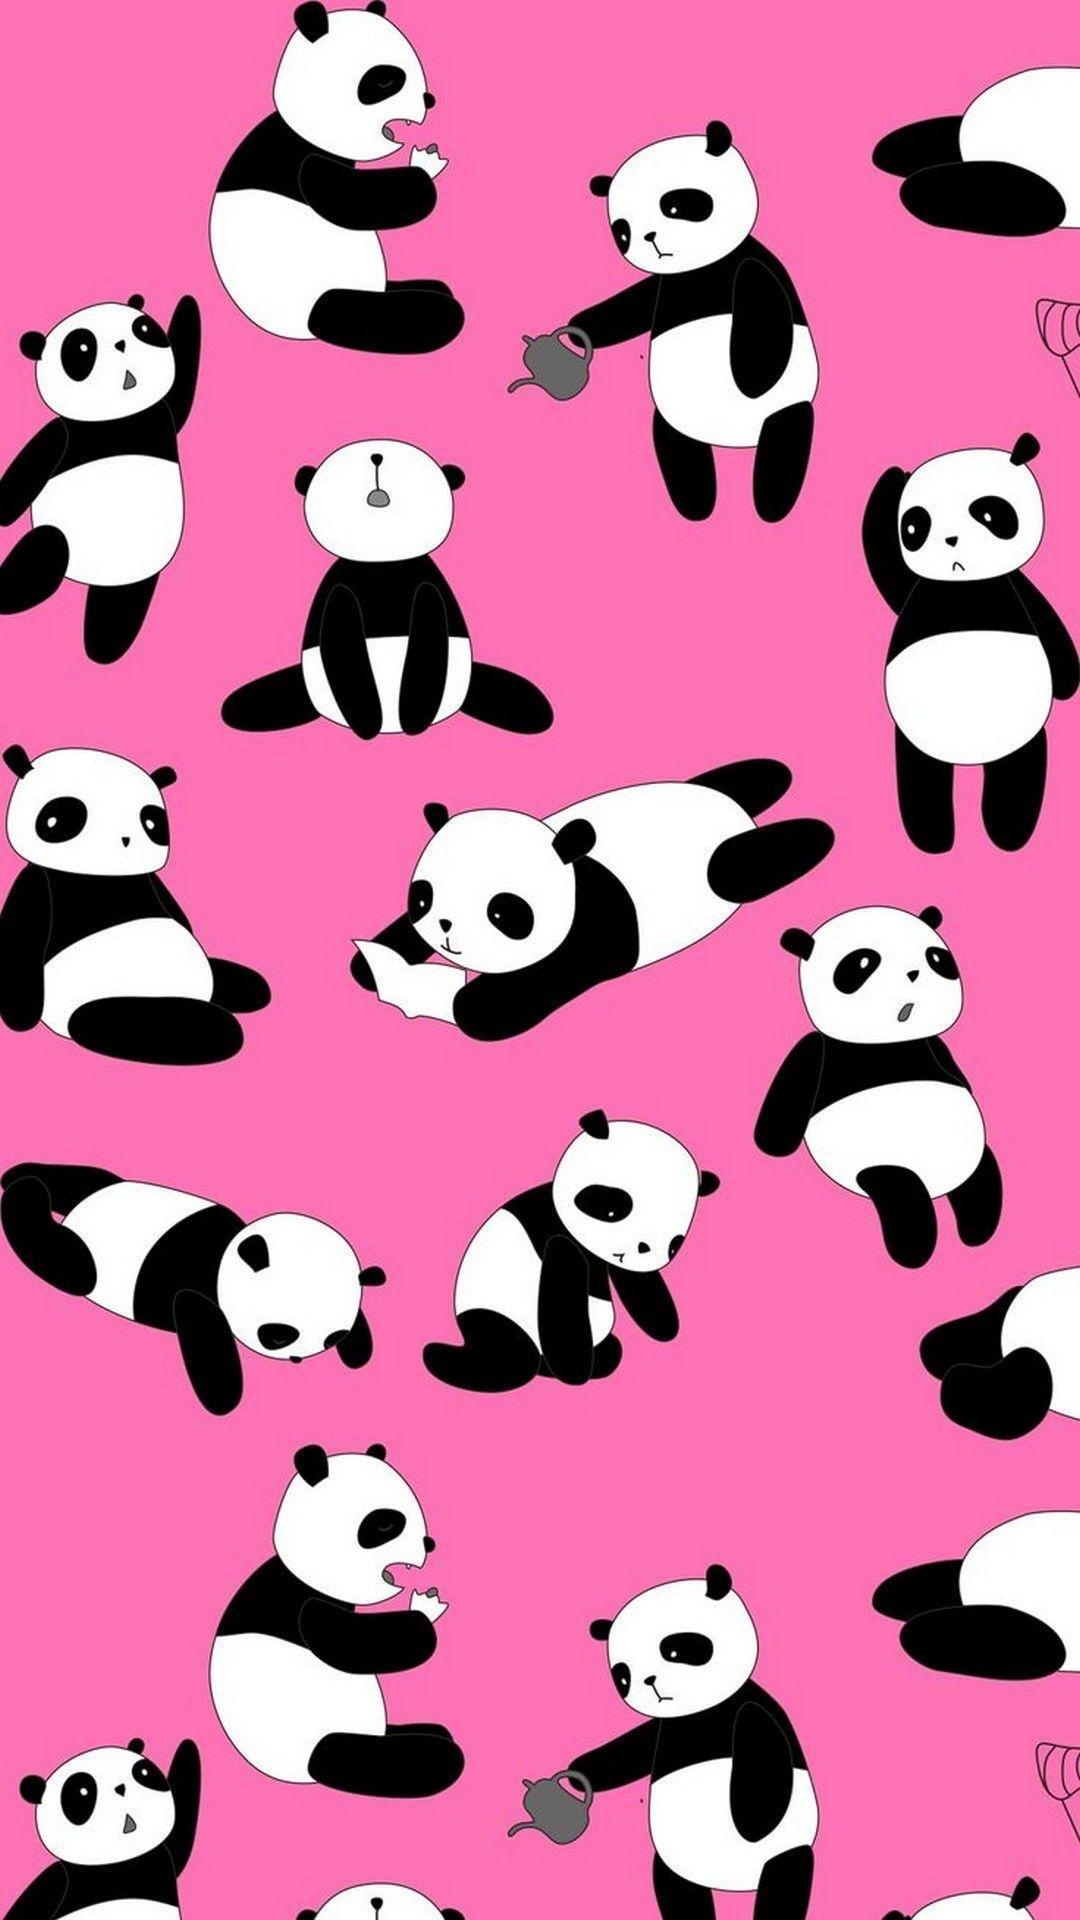 Cute Panda Pink iPhone Wallpaper iPhone Wallpaper. シロクマ イラスト, パンダ イラスト, かわいい壁紙iphone